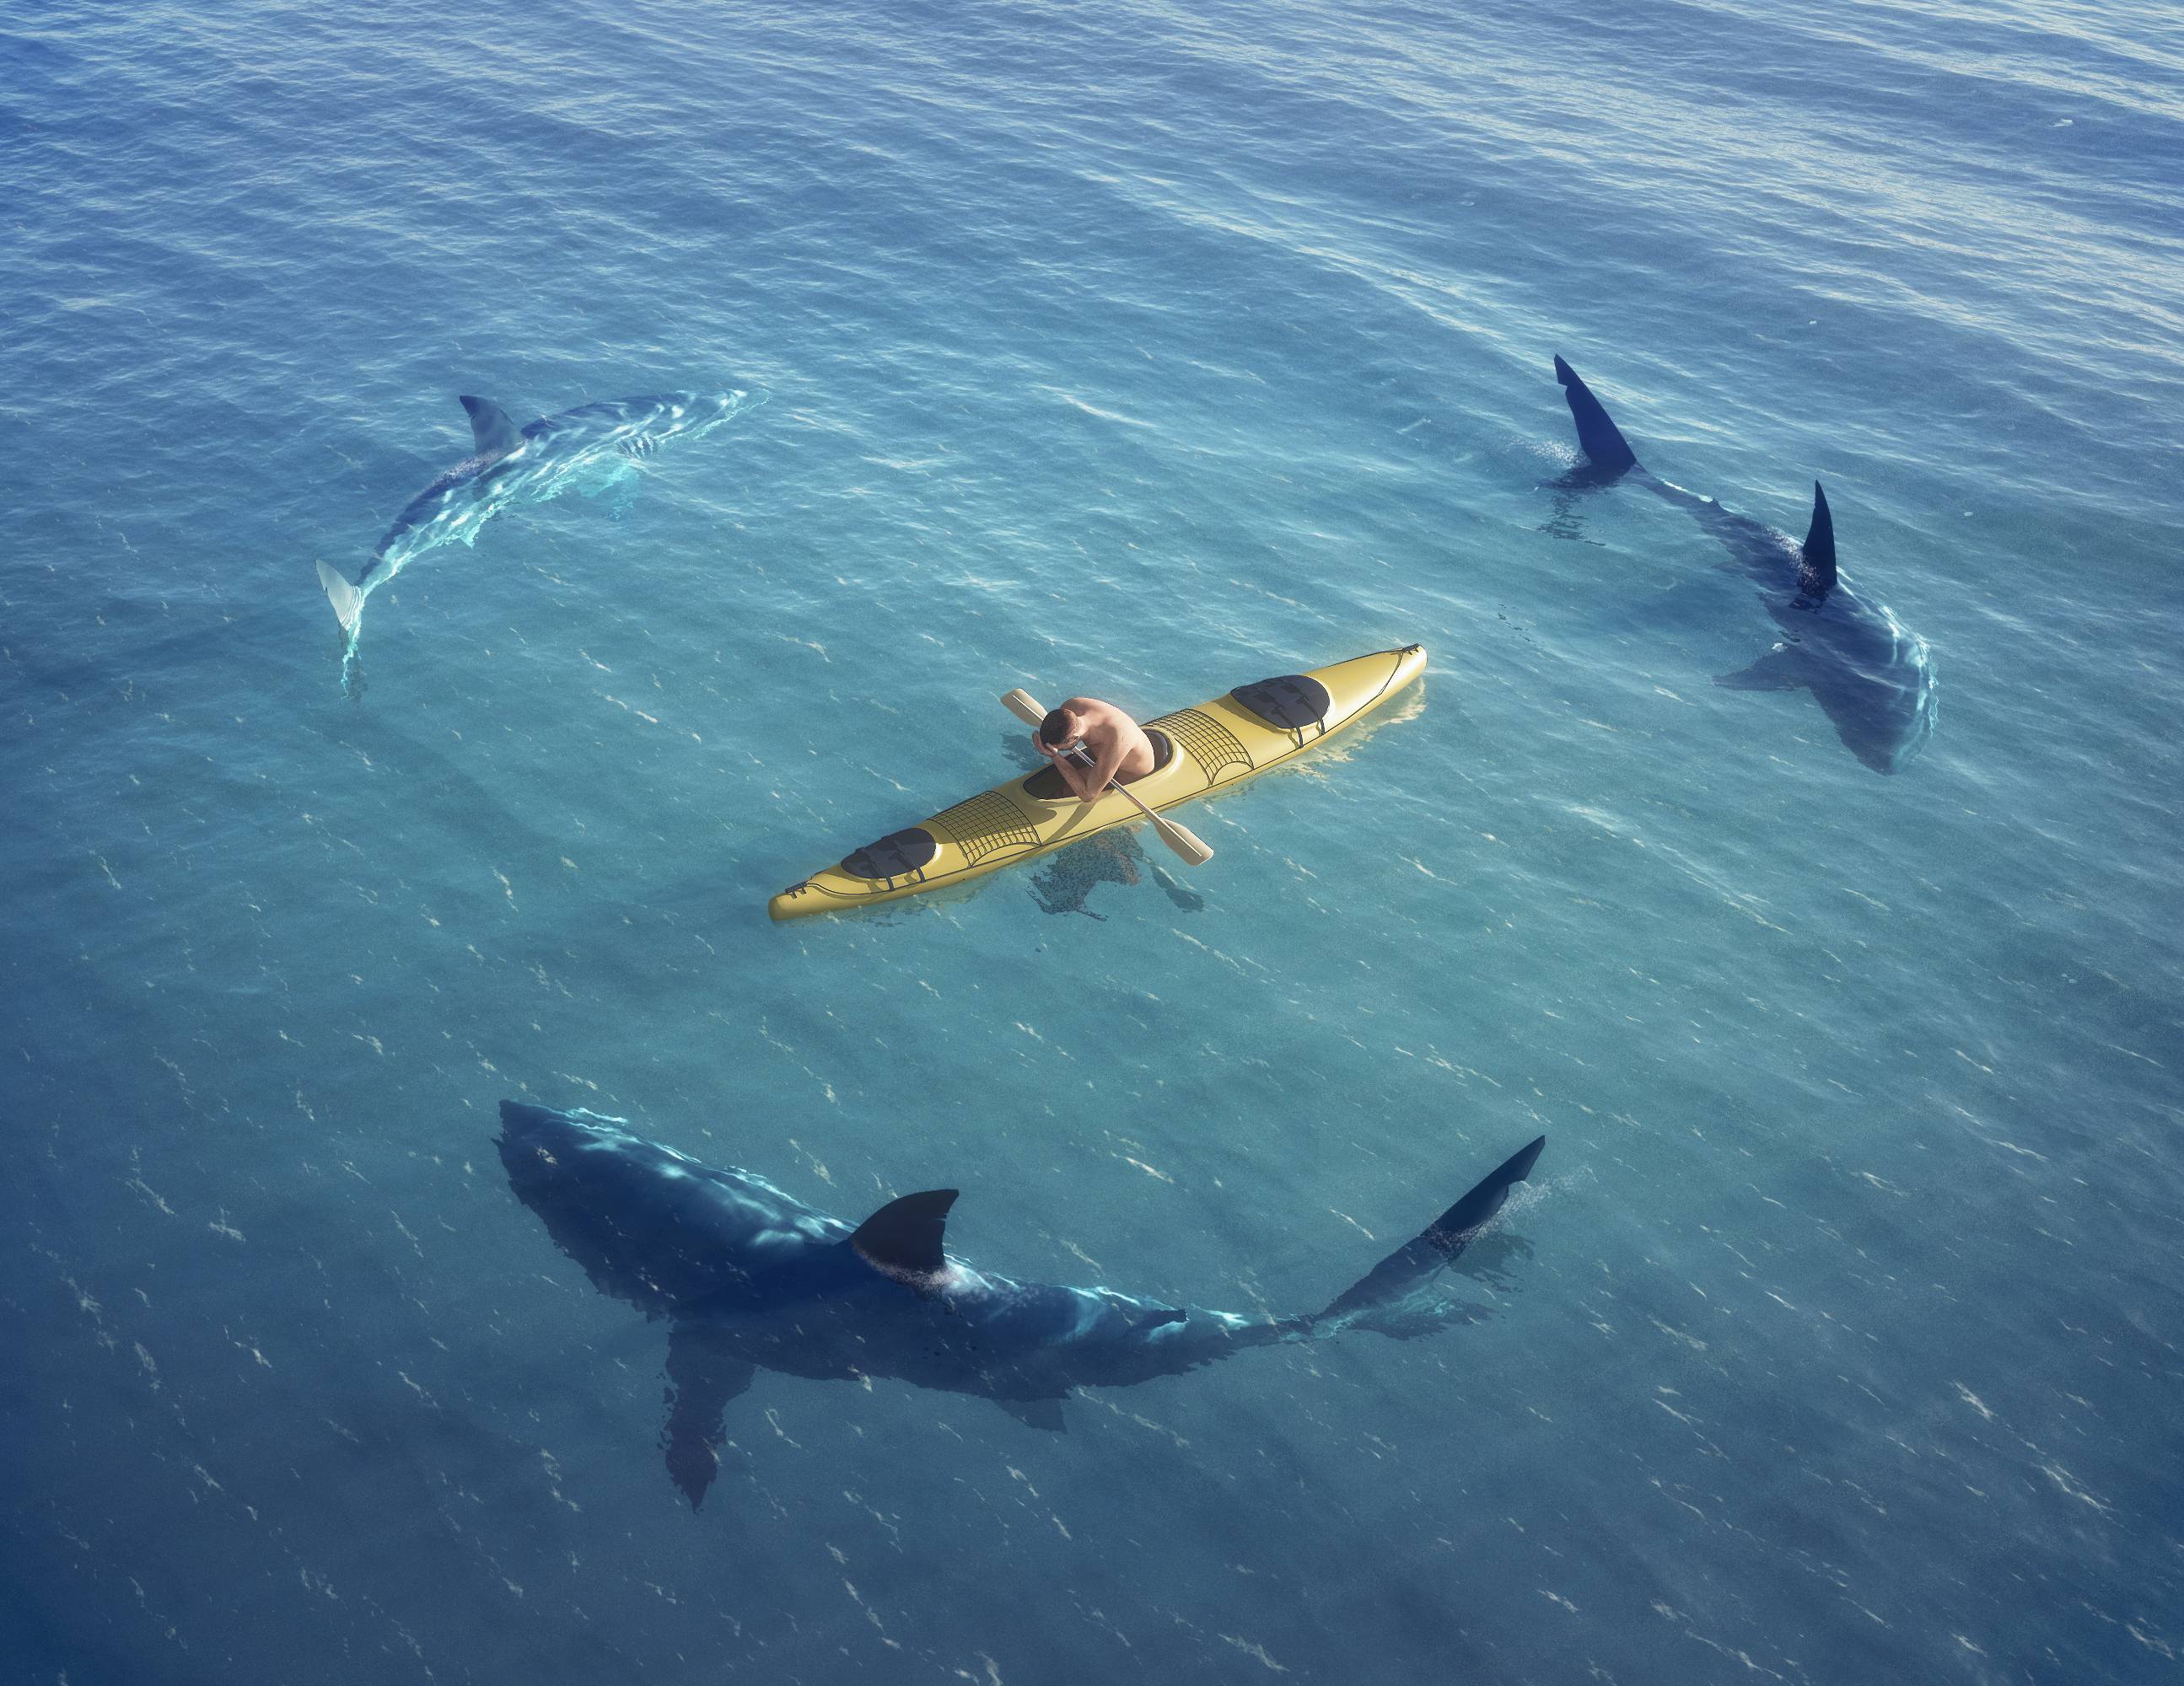 sharks-circling-canoe.jpg